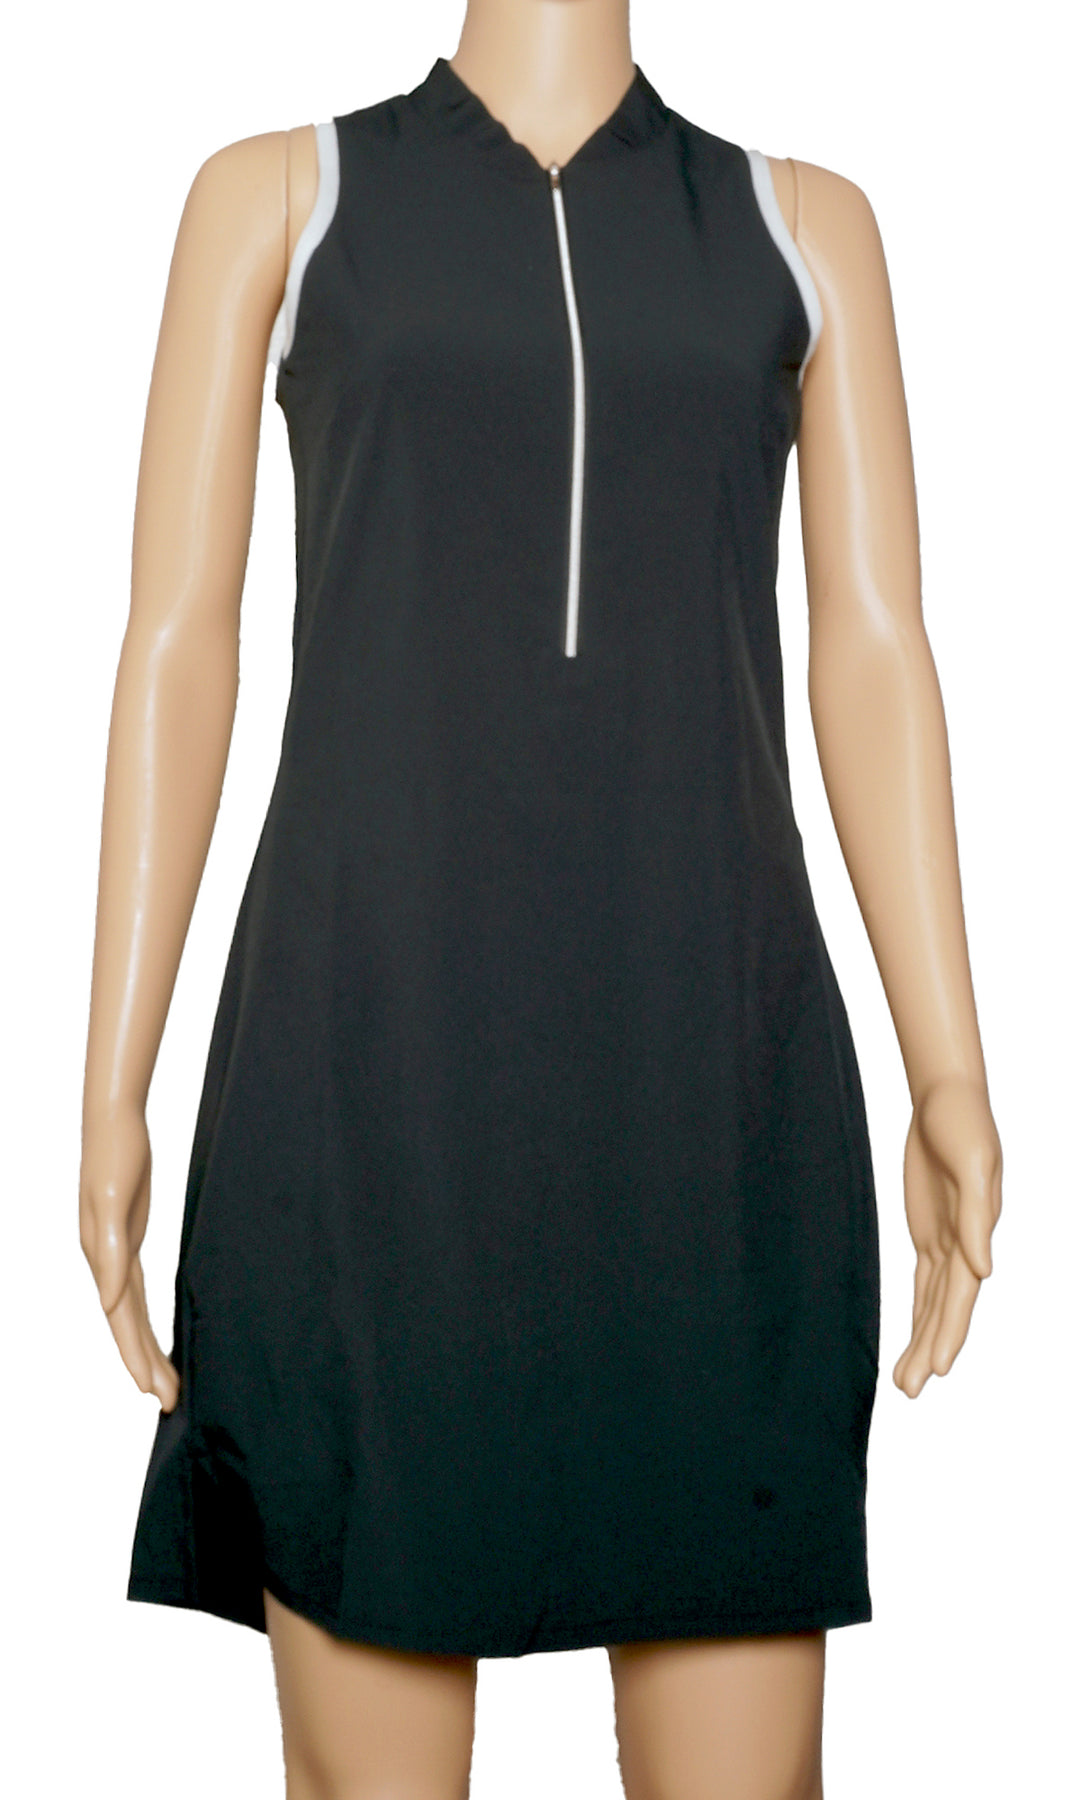 Black Clover Apphrodite Dress - Black - Size Small - Skorzie